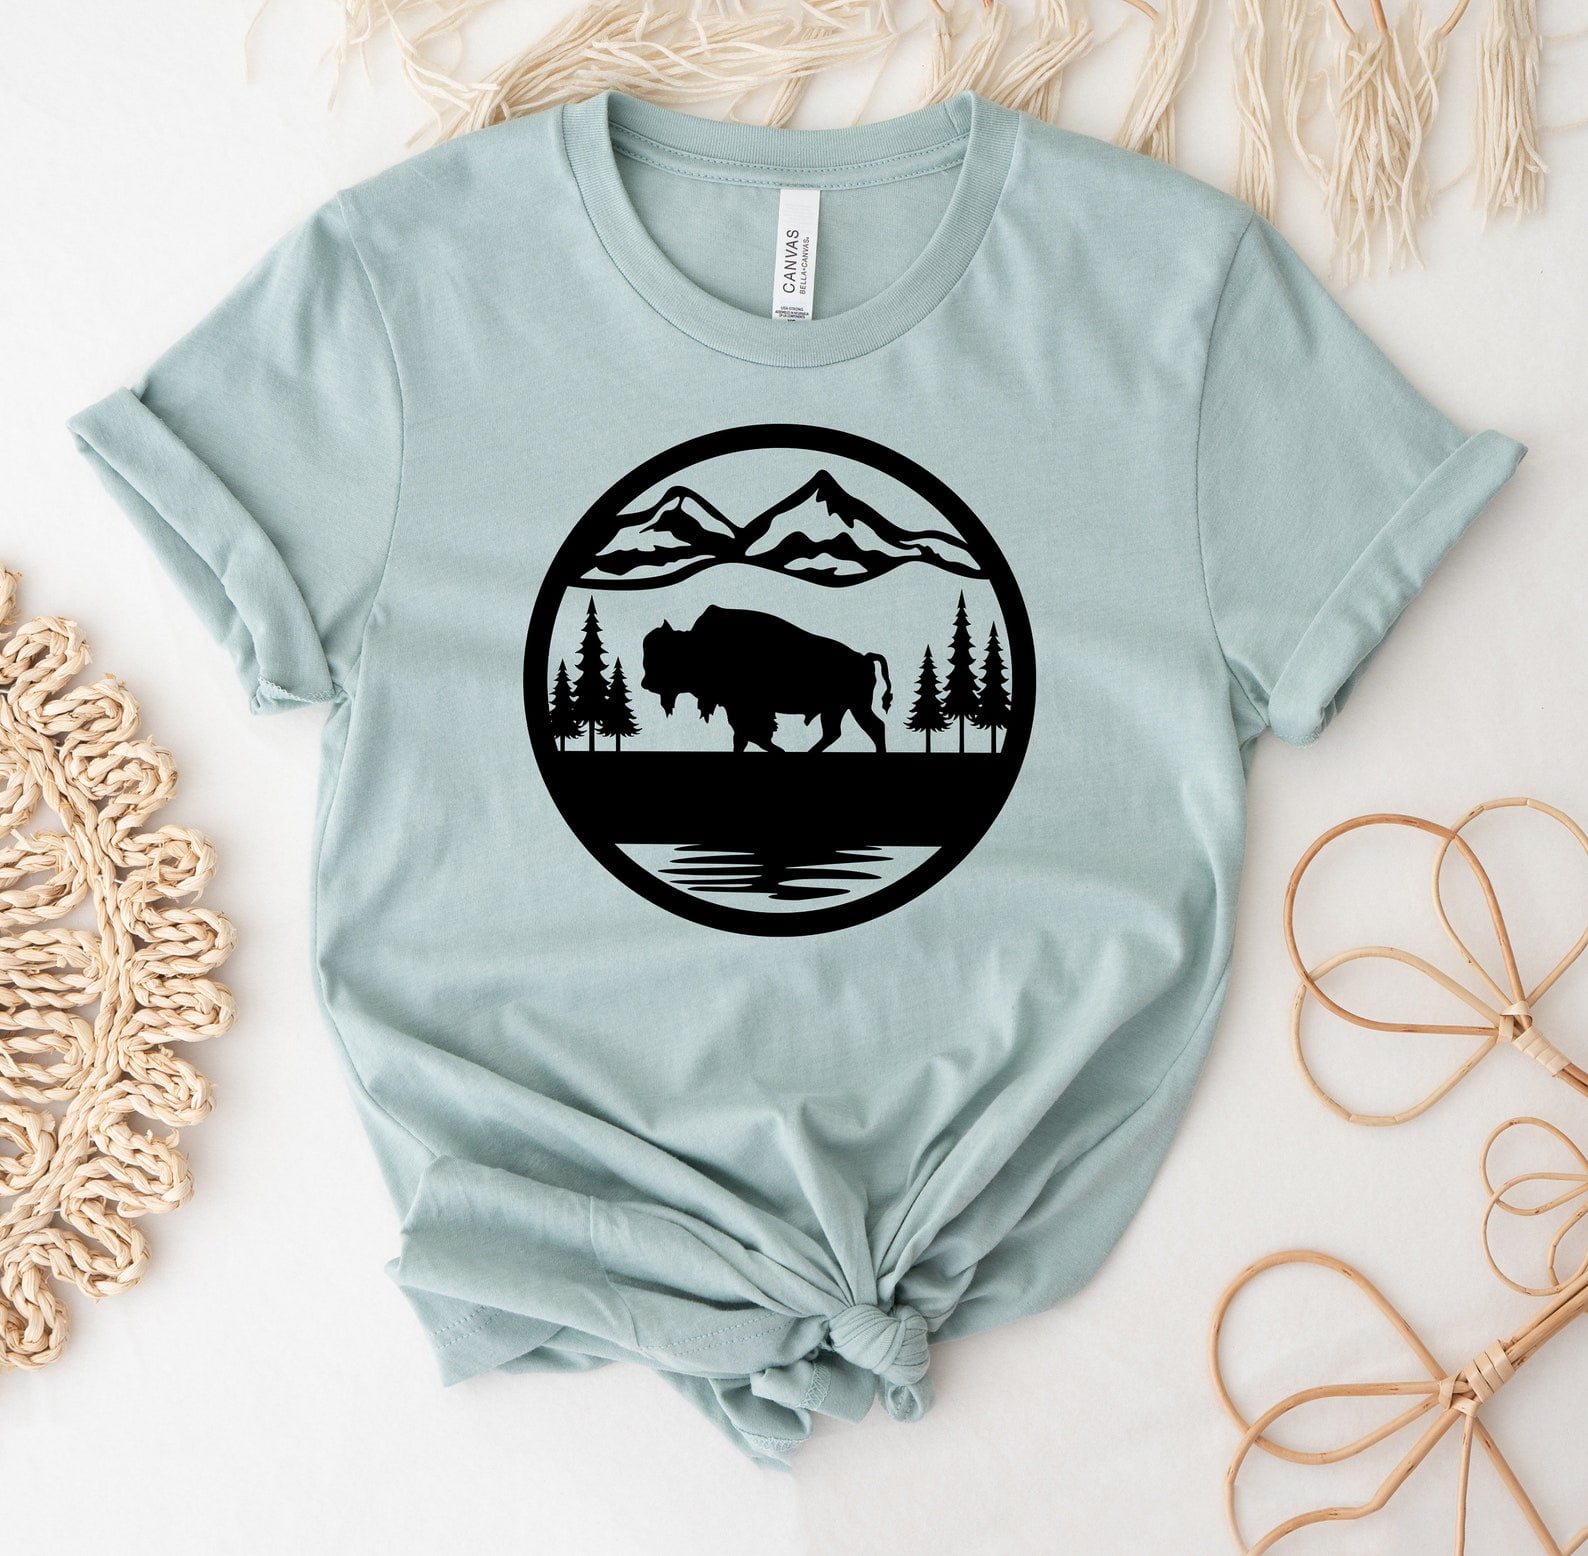 Buffalo Mountain T-shirt Shirt Forest Wildlife Top Tee Badlands National Park Shirts Nps Bison - Walmart.com